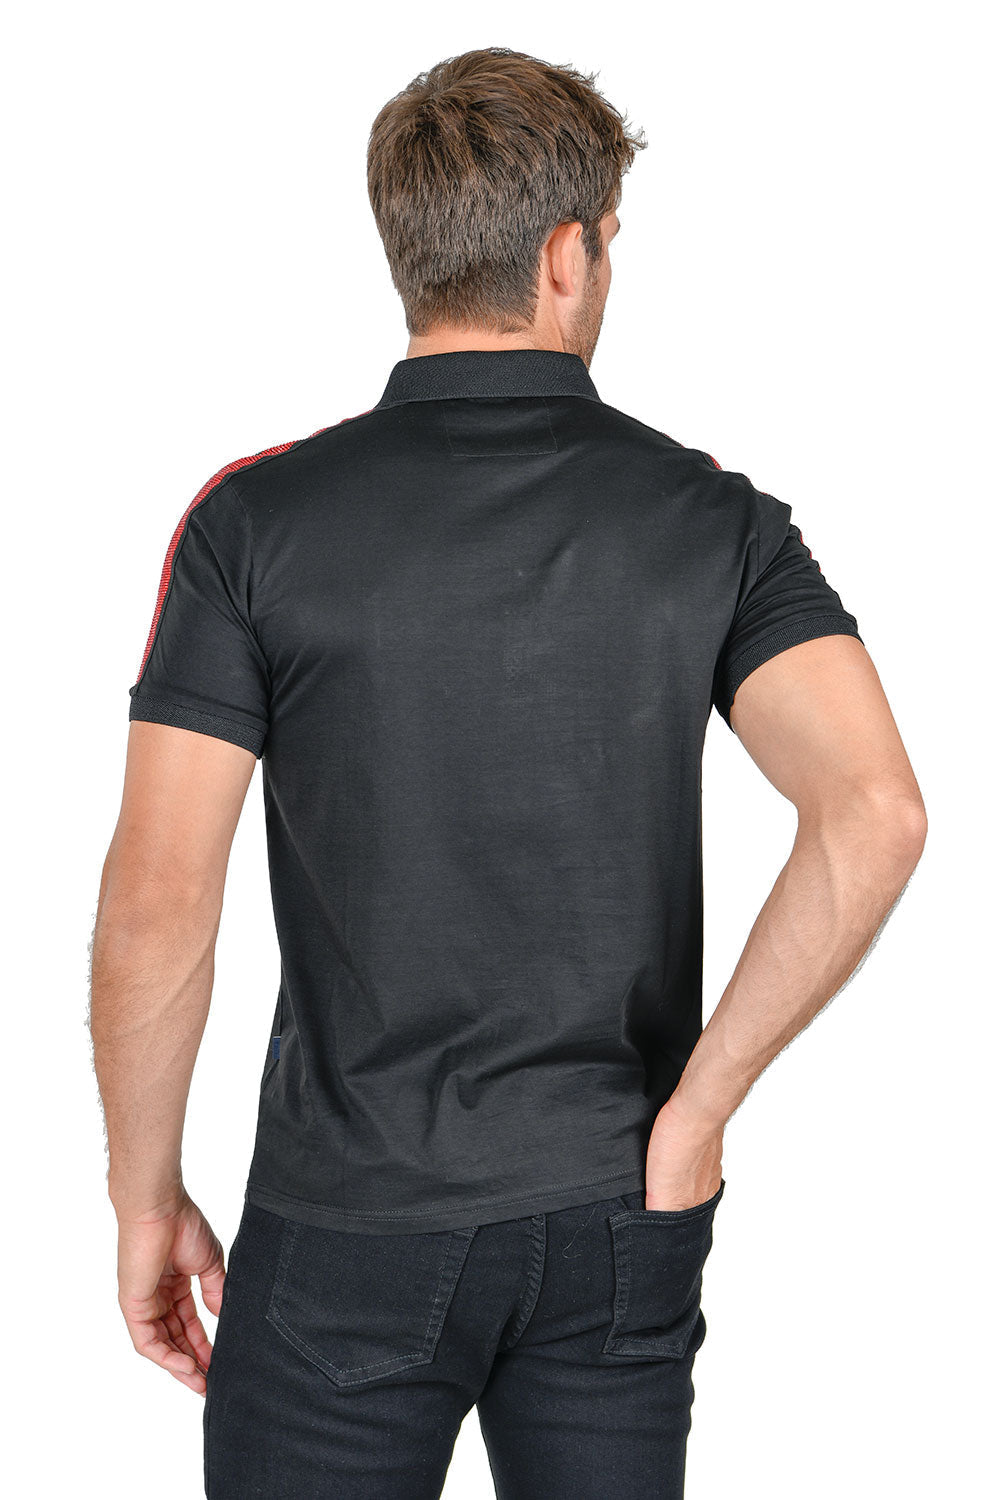 men's-rhinestone-short-sleeve-polo-shirts-back-look